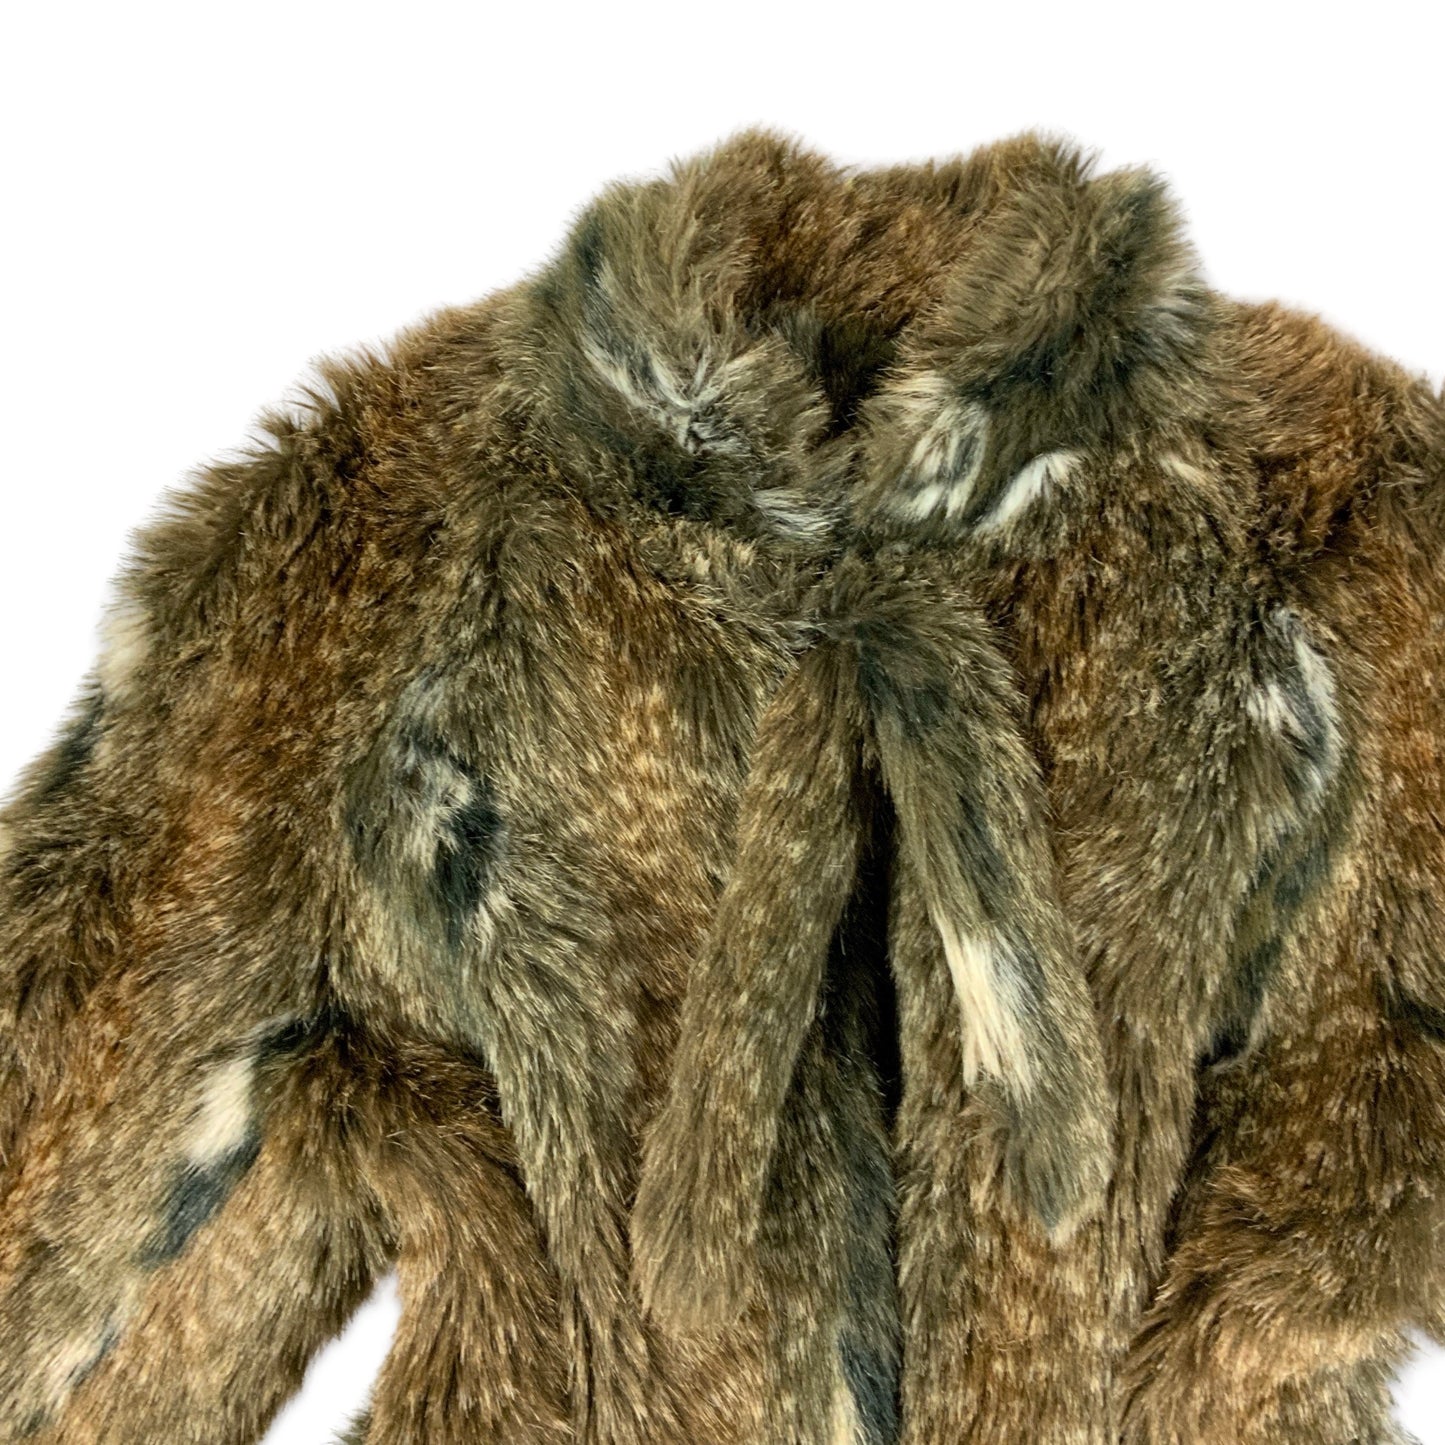 Vintage Brown Faux Fur Coat 10